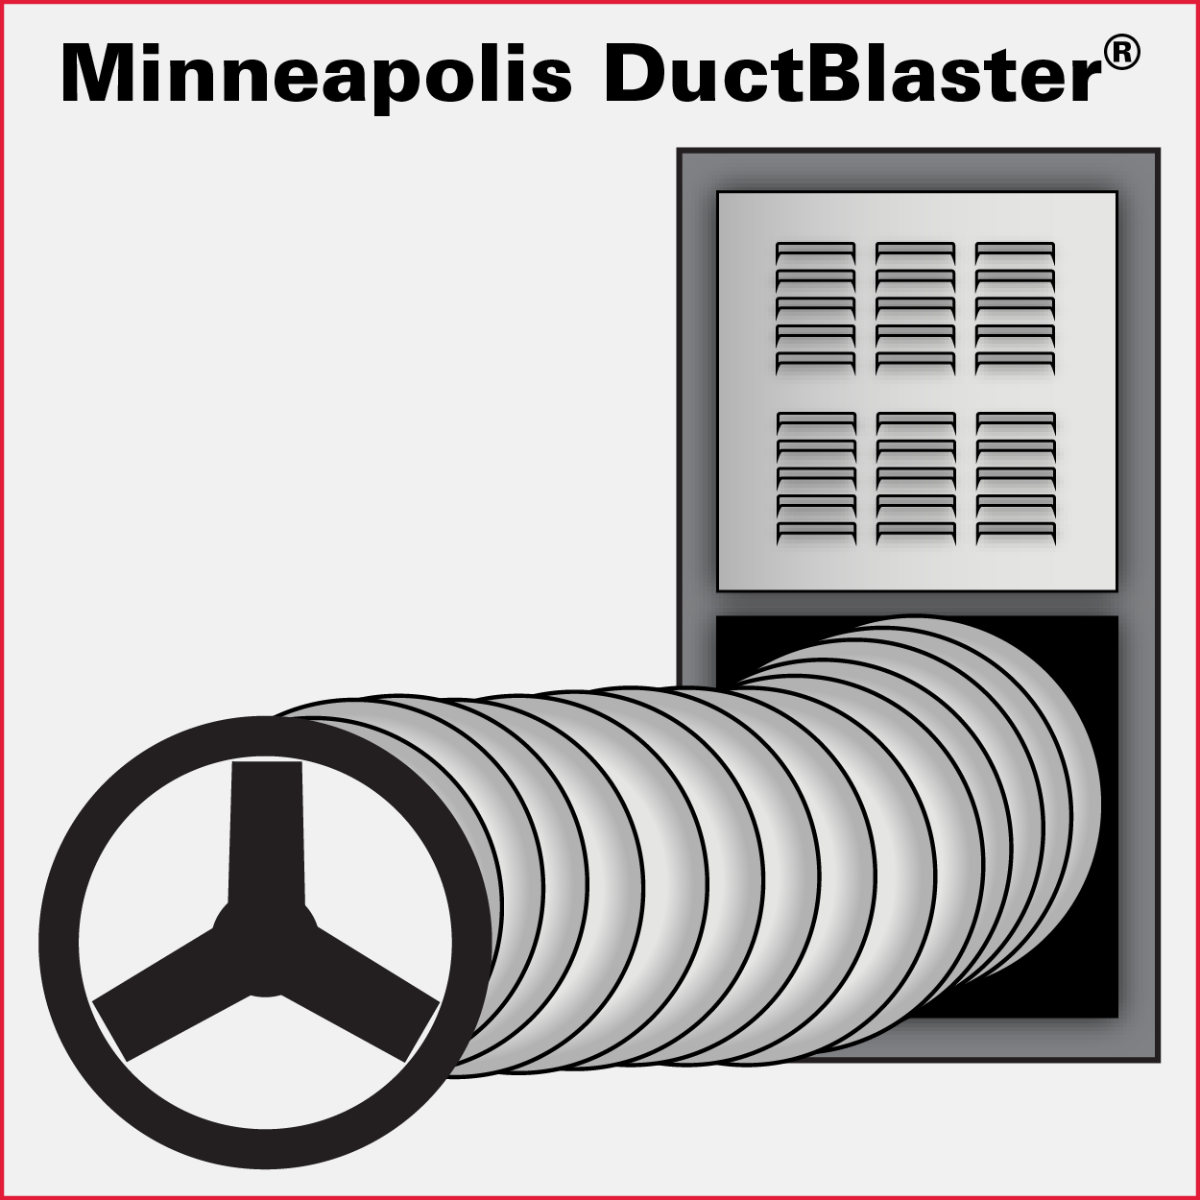 Minneapolis DuctBlaster